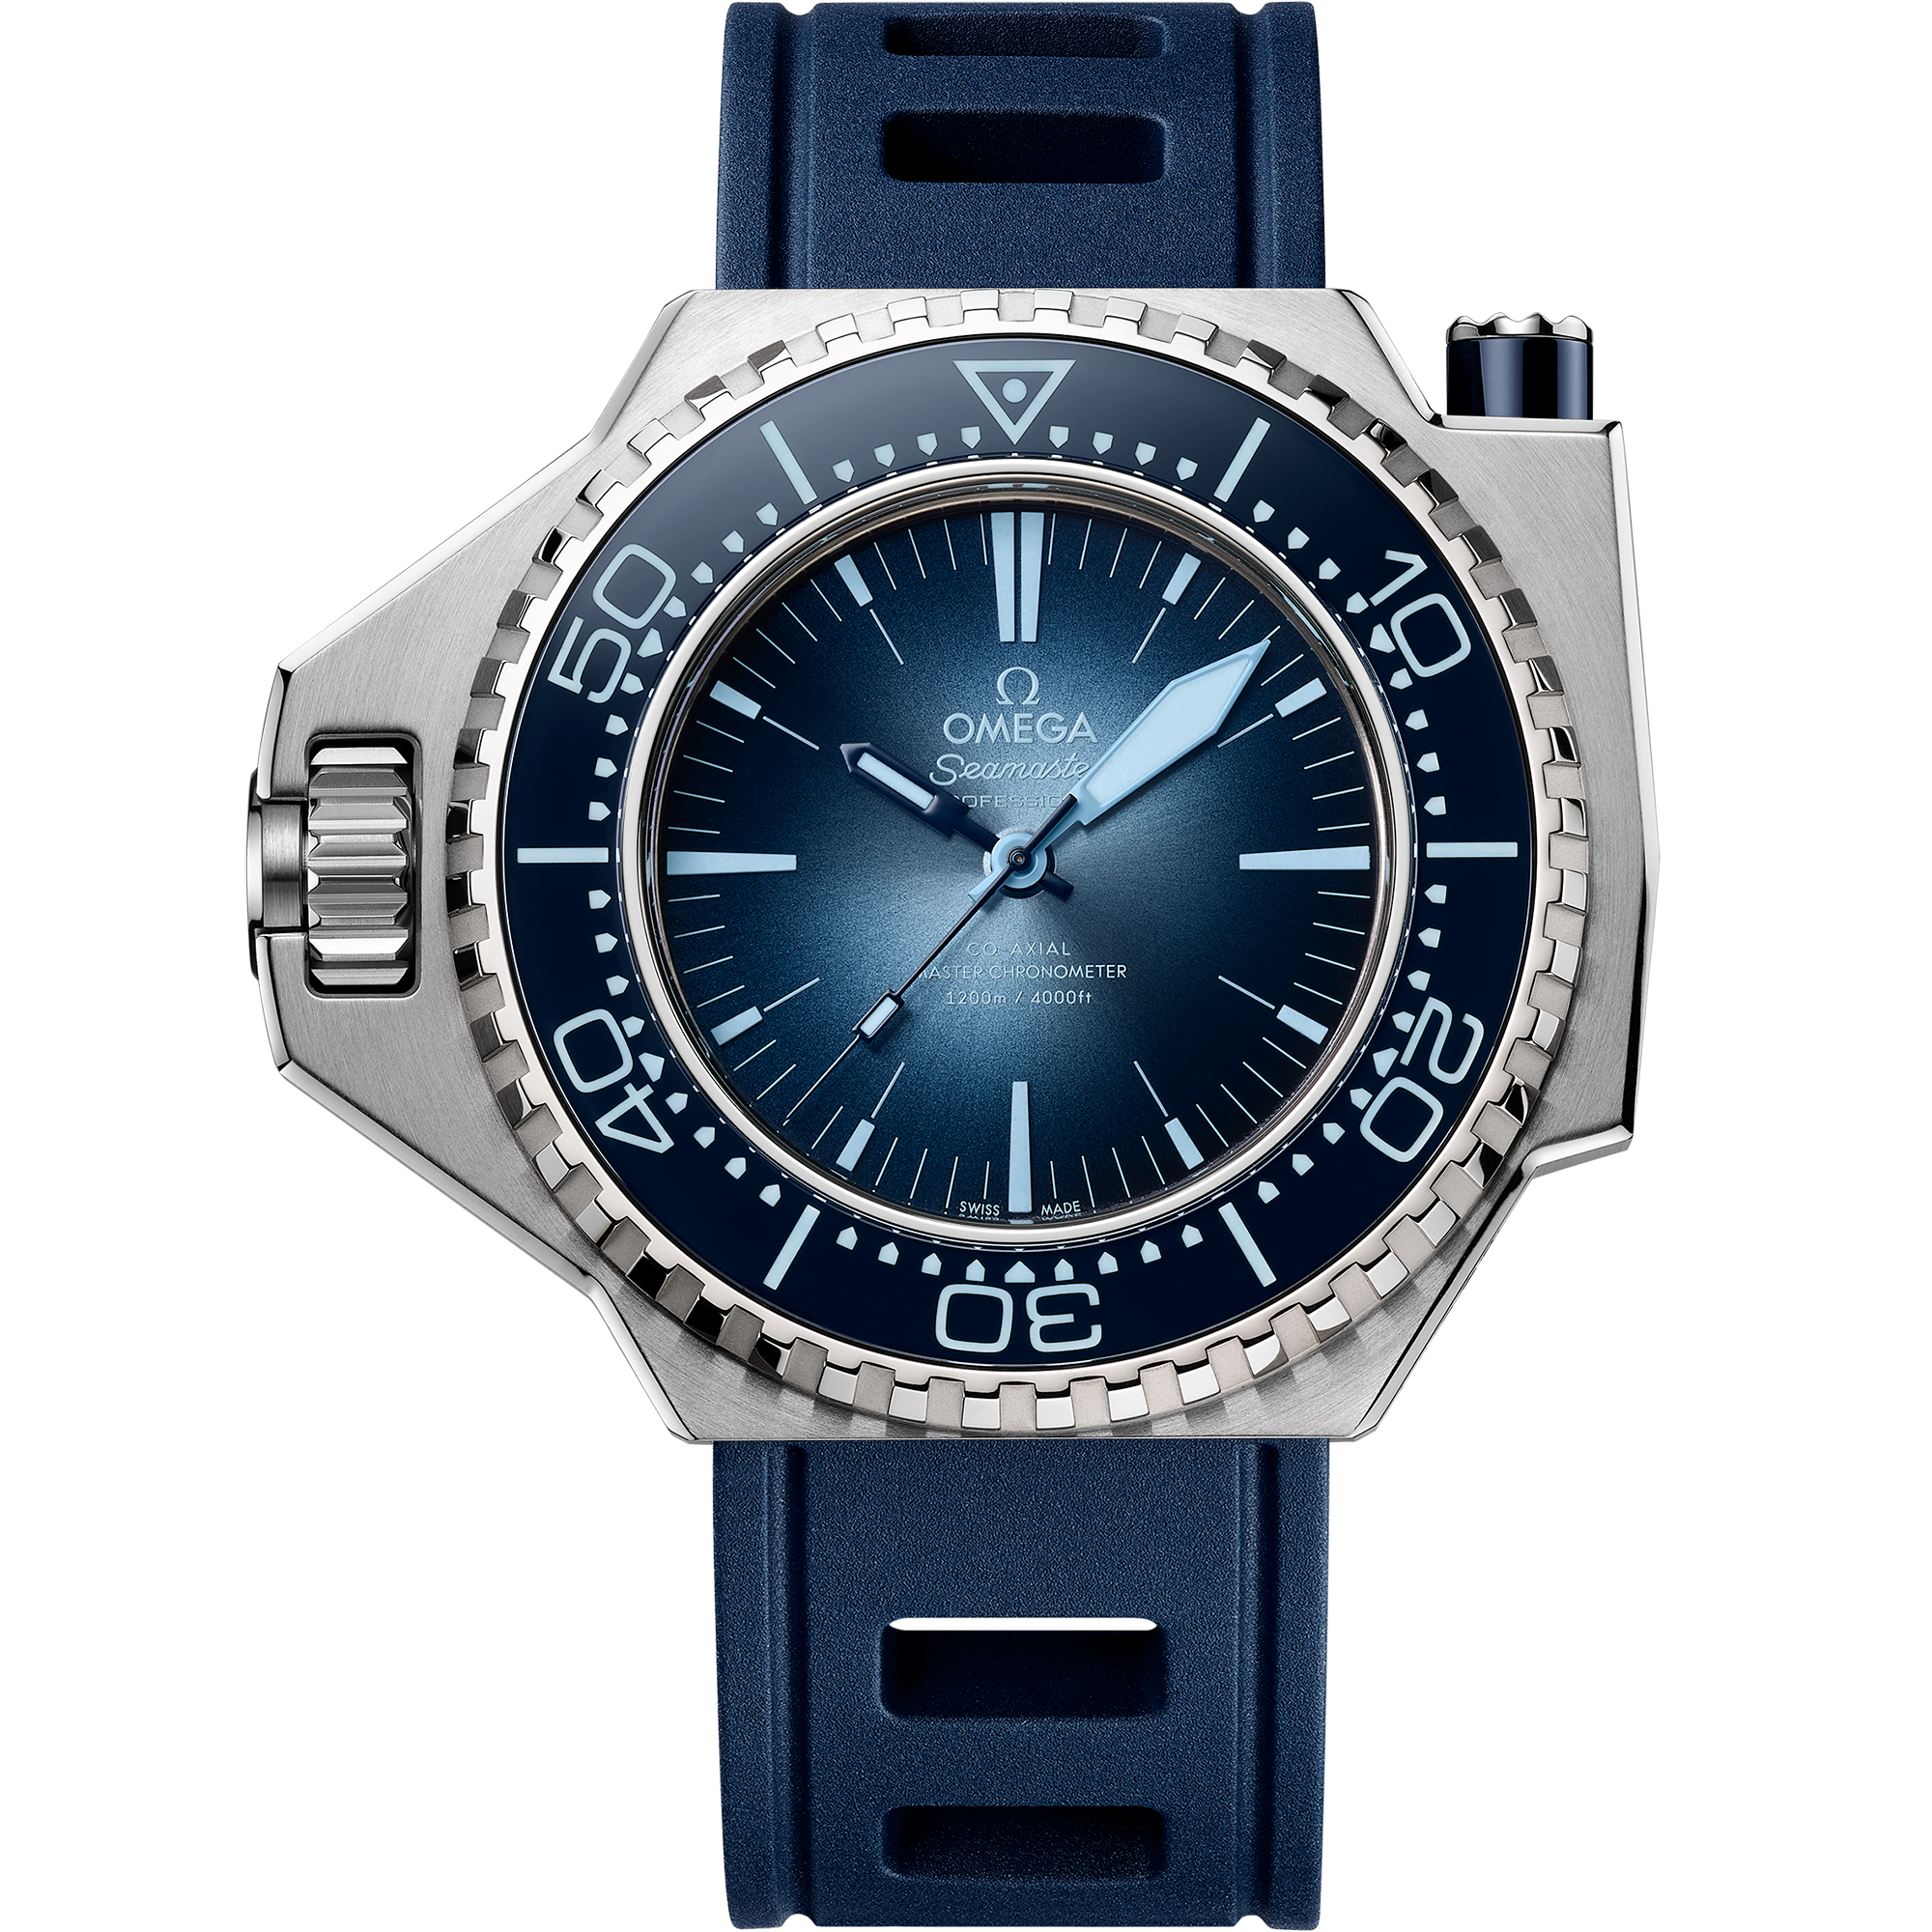 Blue dial watch on O-MEGASTEEL case with Rubber strap - Seamaster Ploprof 1200M 55 x 45 mm, O-MEGASTEEL on rubber strap - 227.32.55.21.03.001